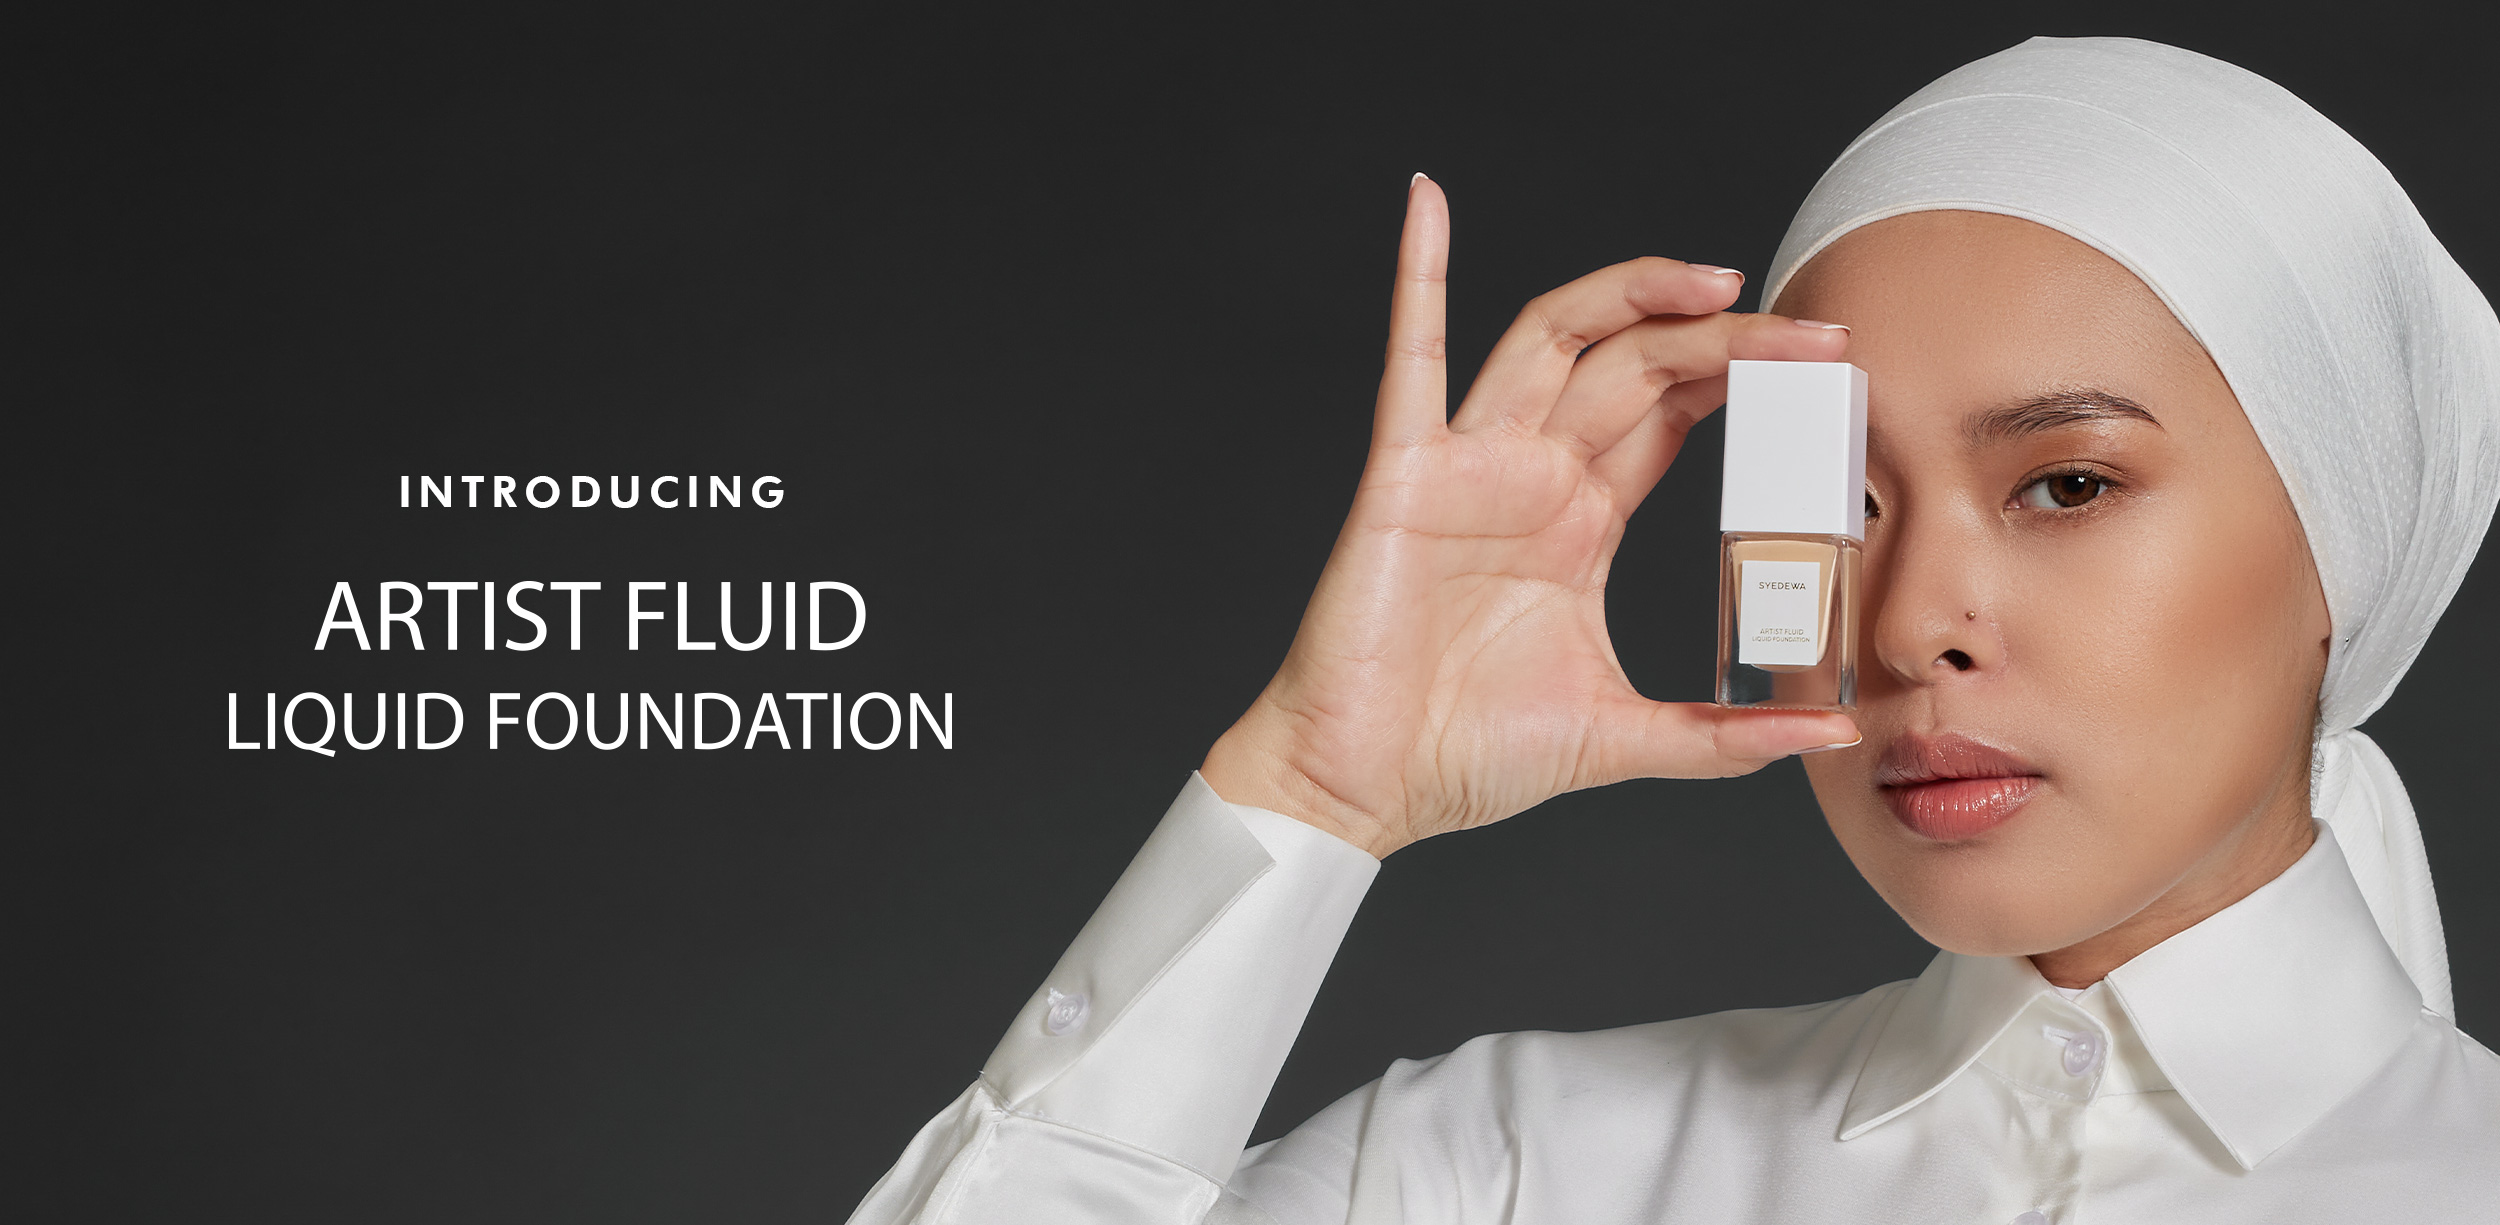 Artist Fluid Liquid Foundation